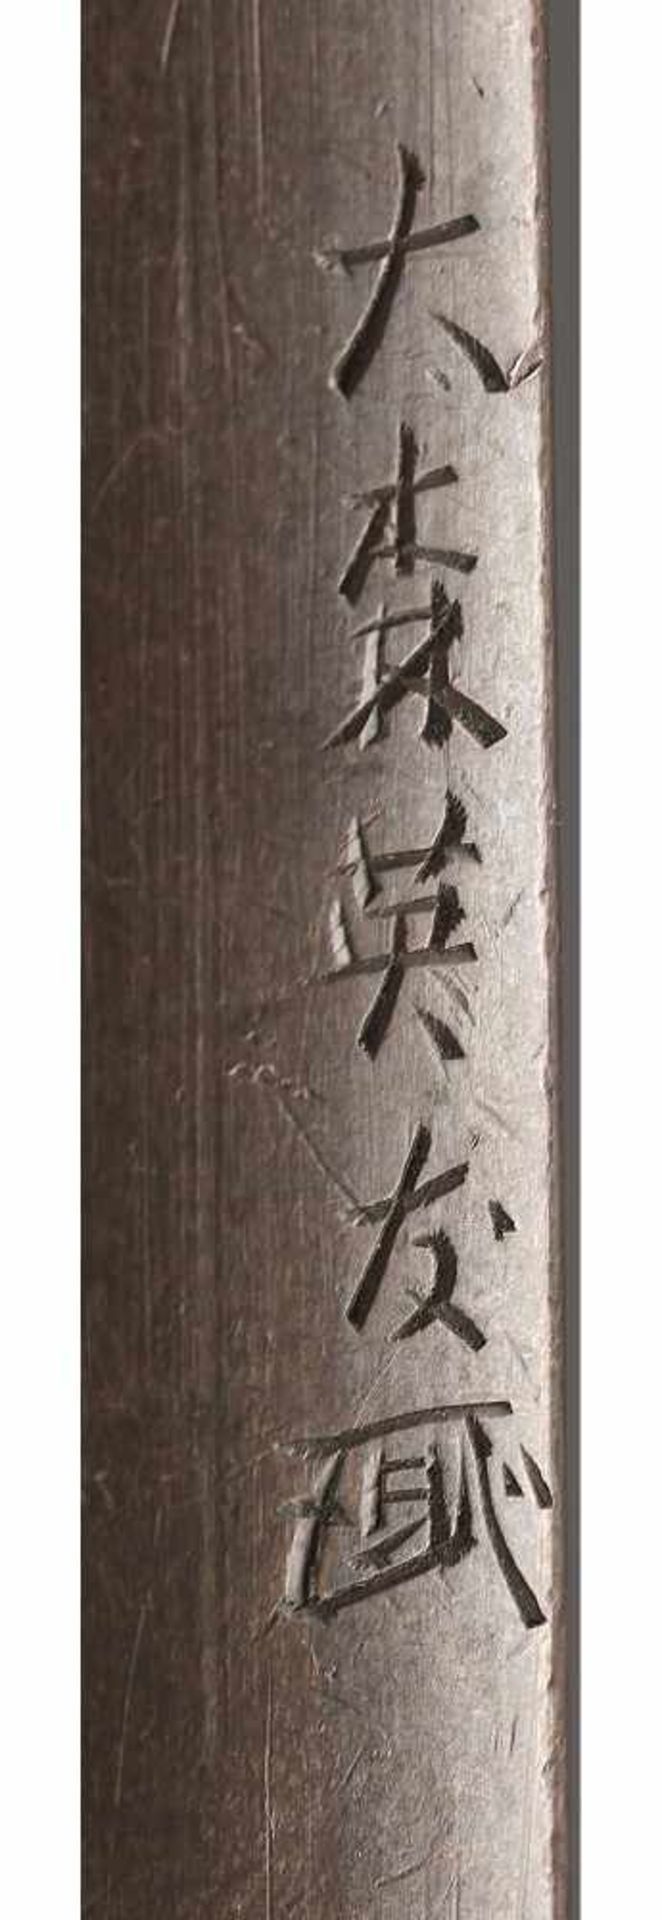 A FINE SHAKUDO KOZUKA HANDLE DEPICTING A GOLD DRAGON BY HIDETOMO By Hidetomo, kozuka handle, - Image 2 of 4